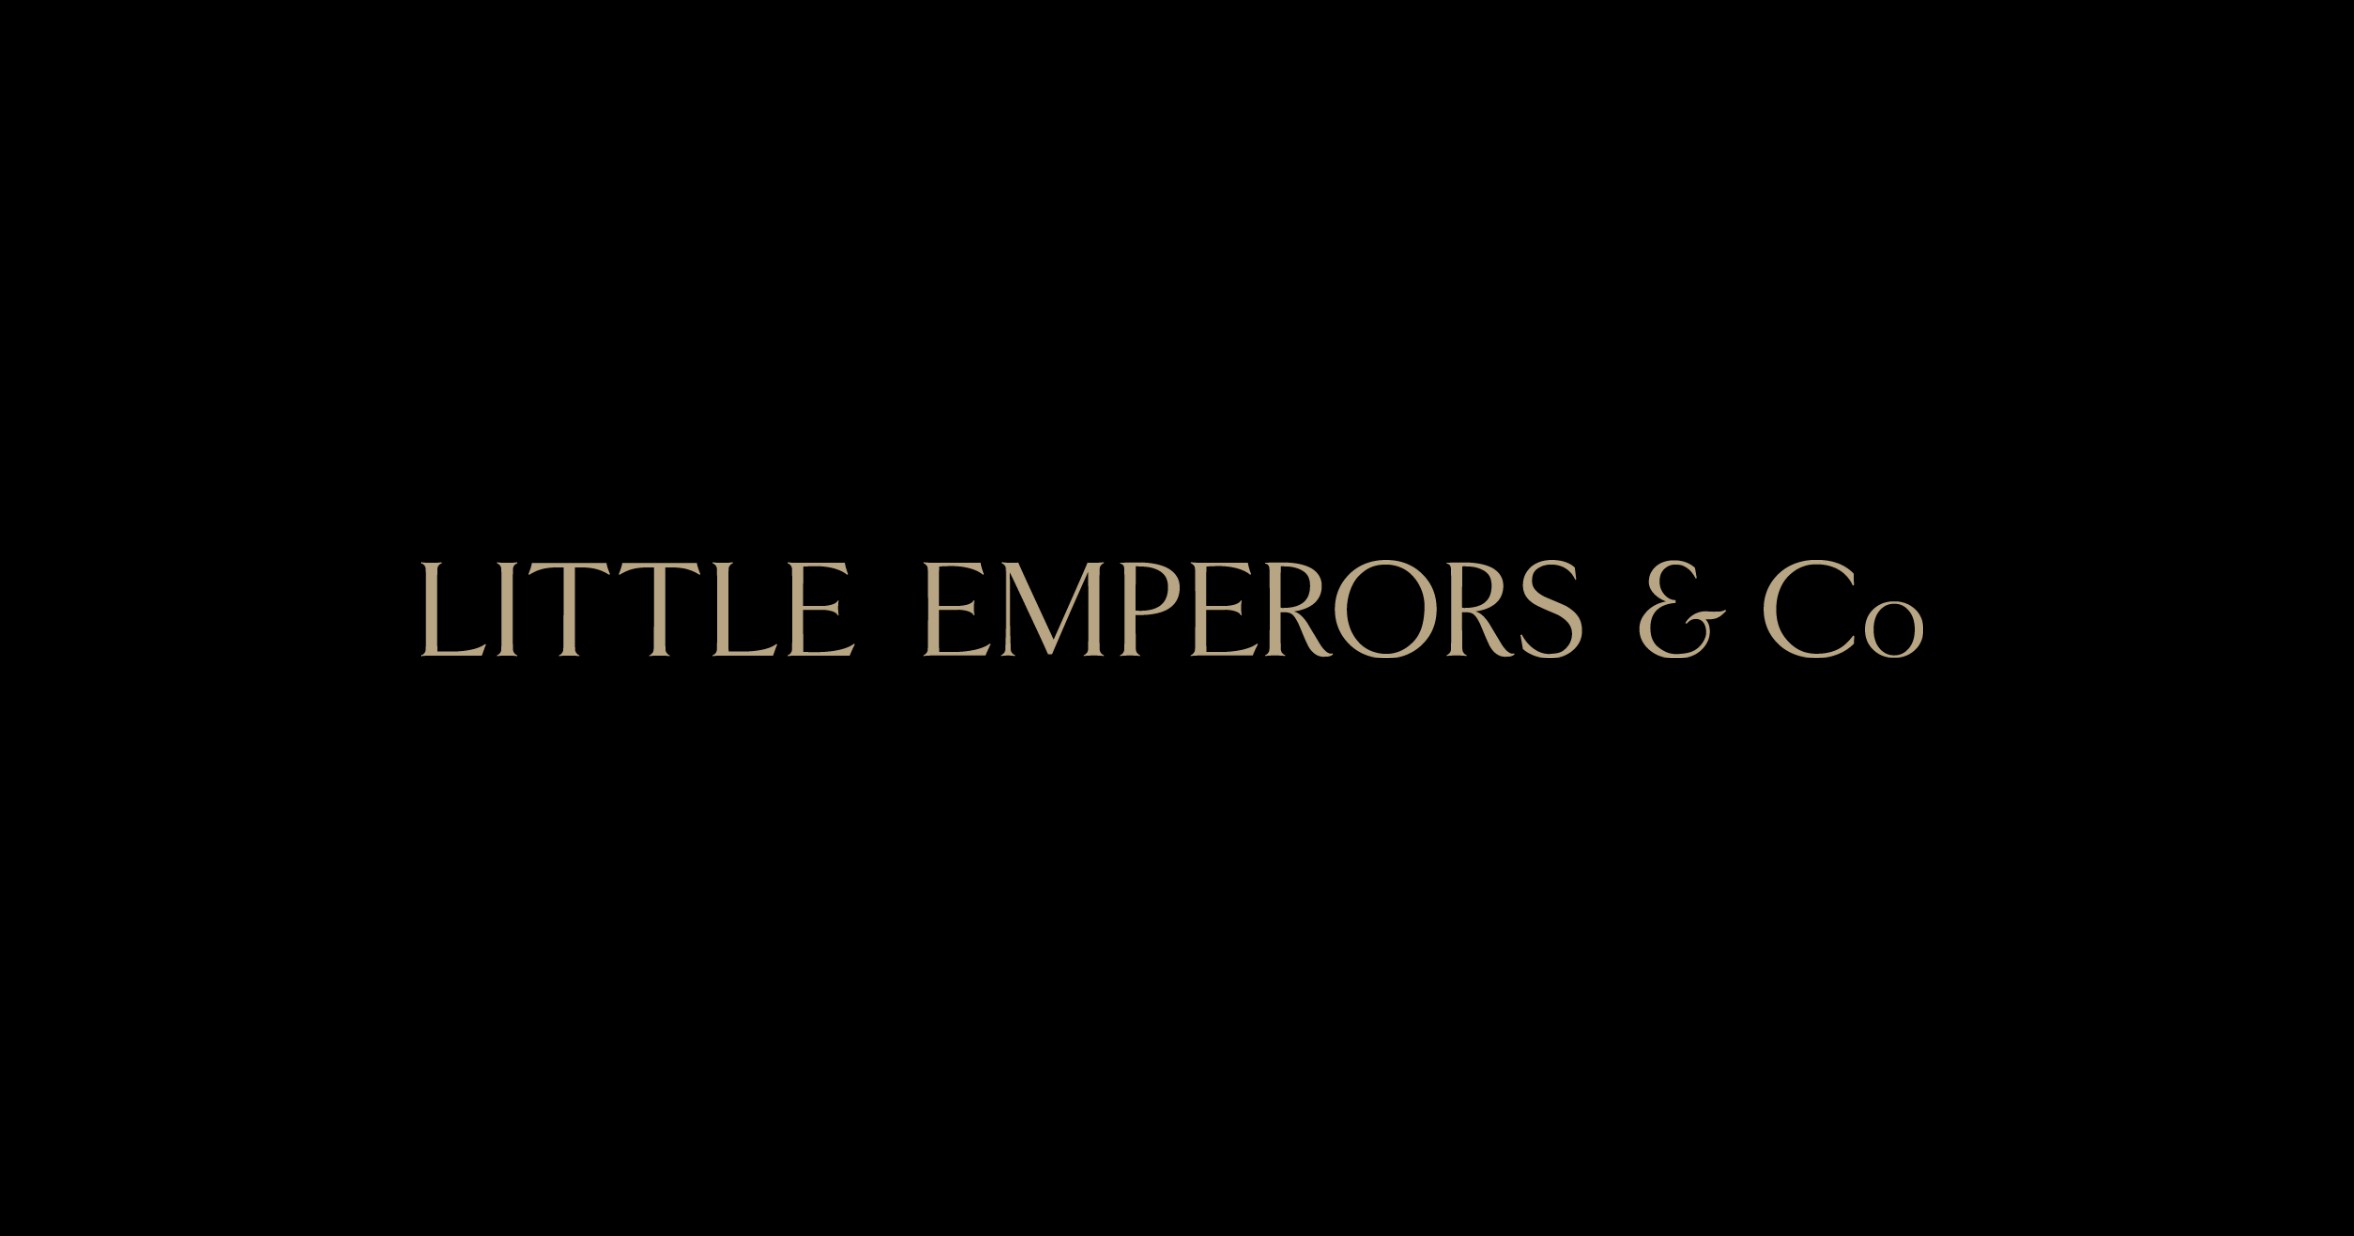 Little Emperors &amp; Co | LinkedIn